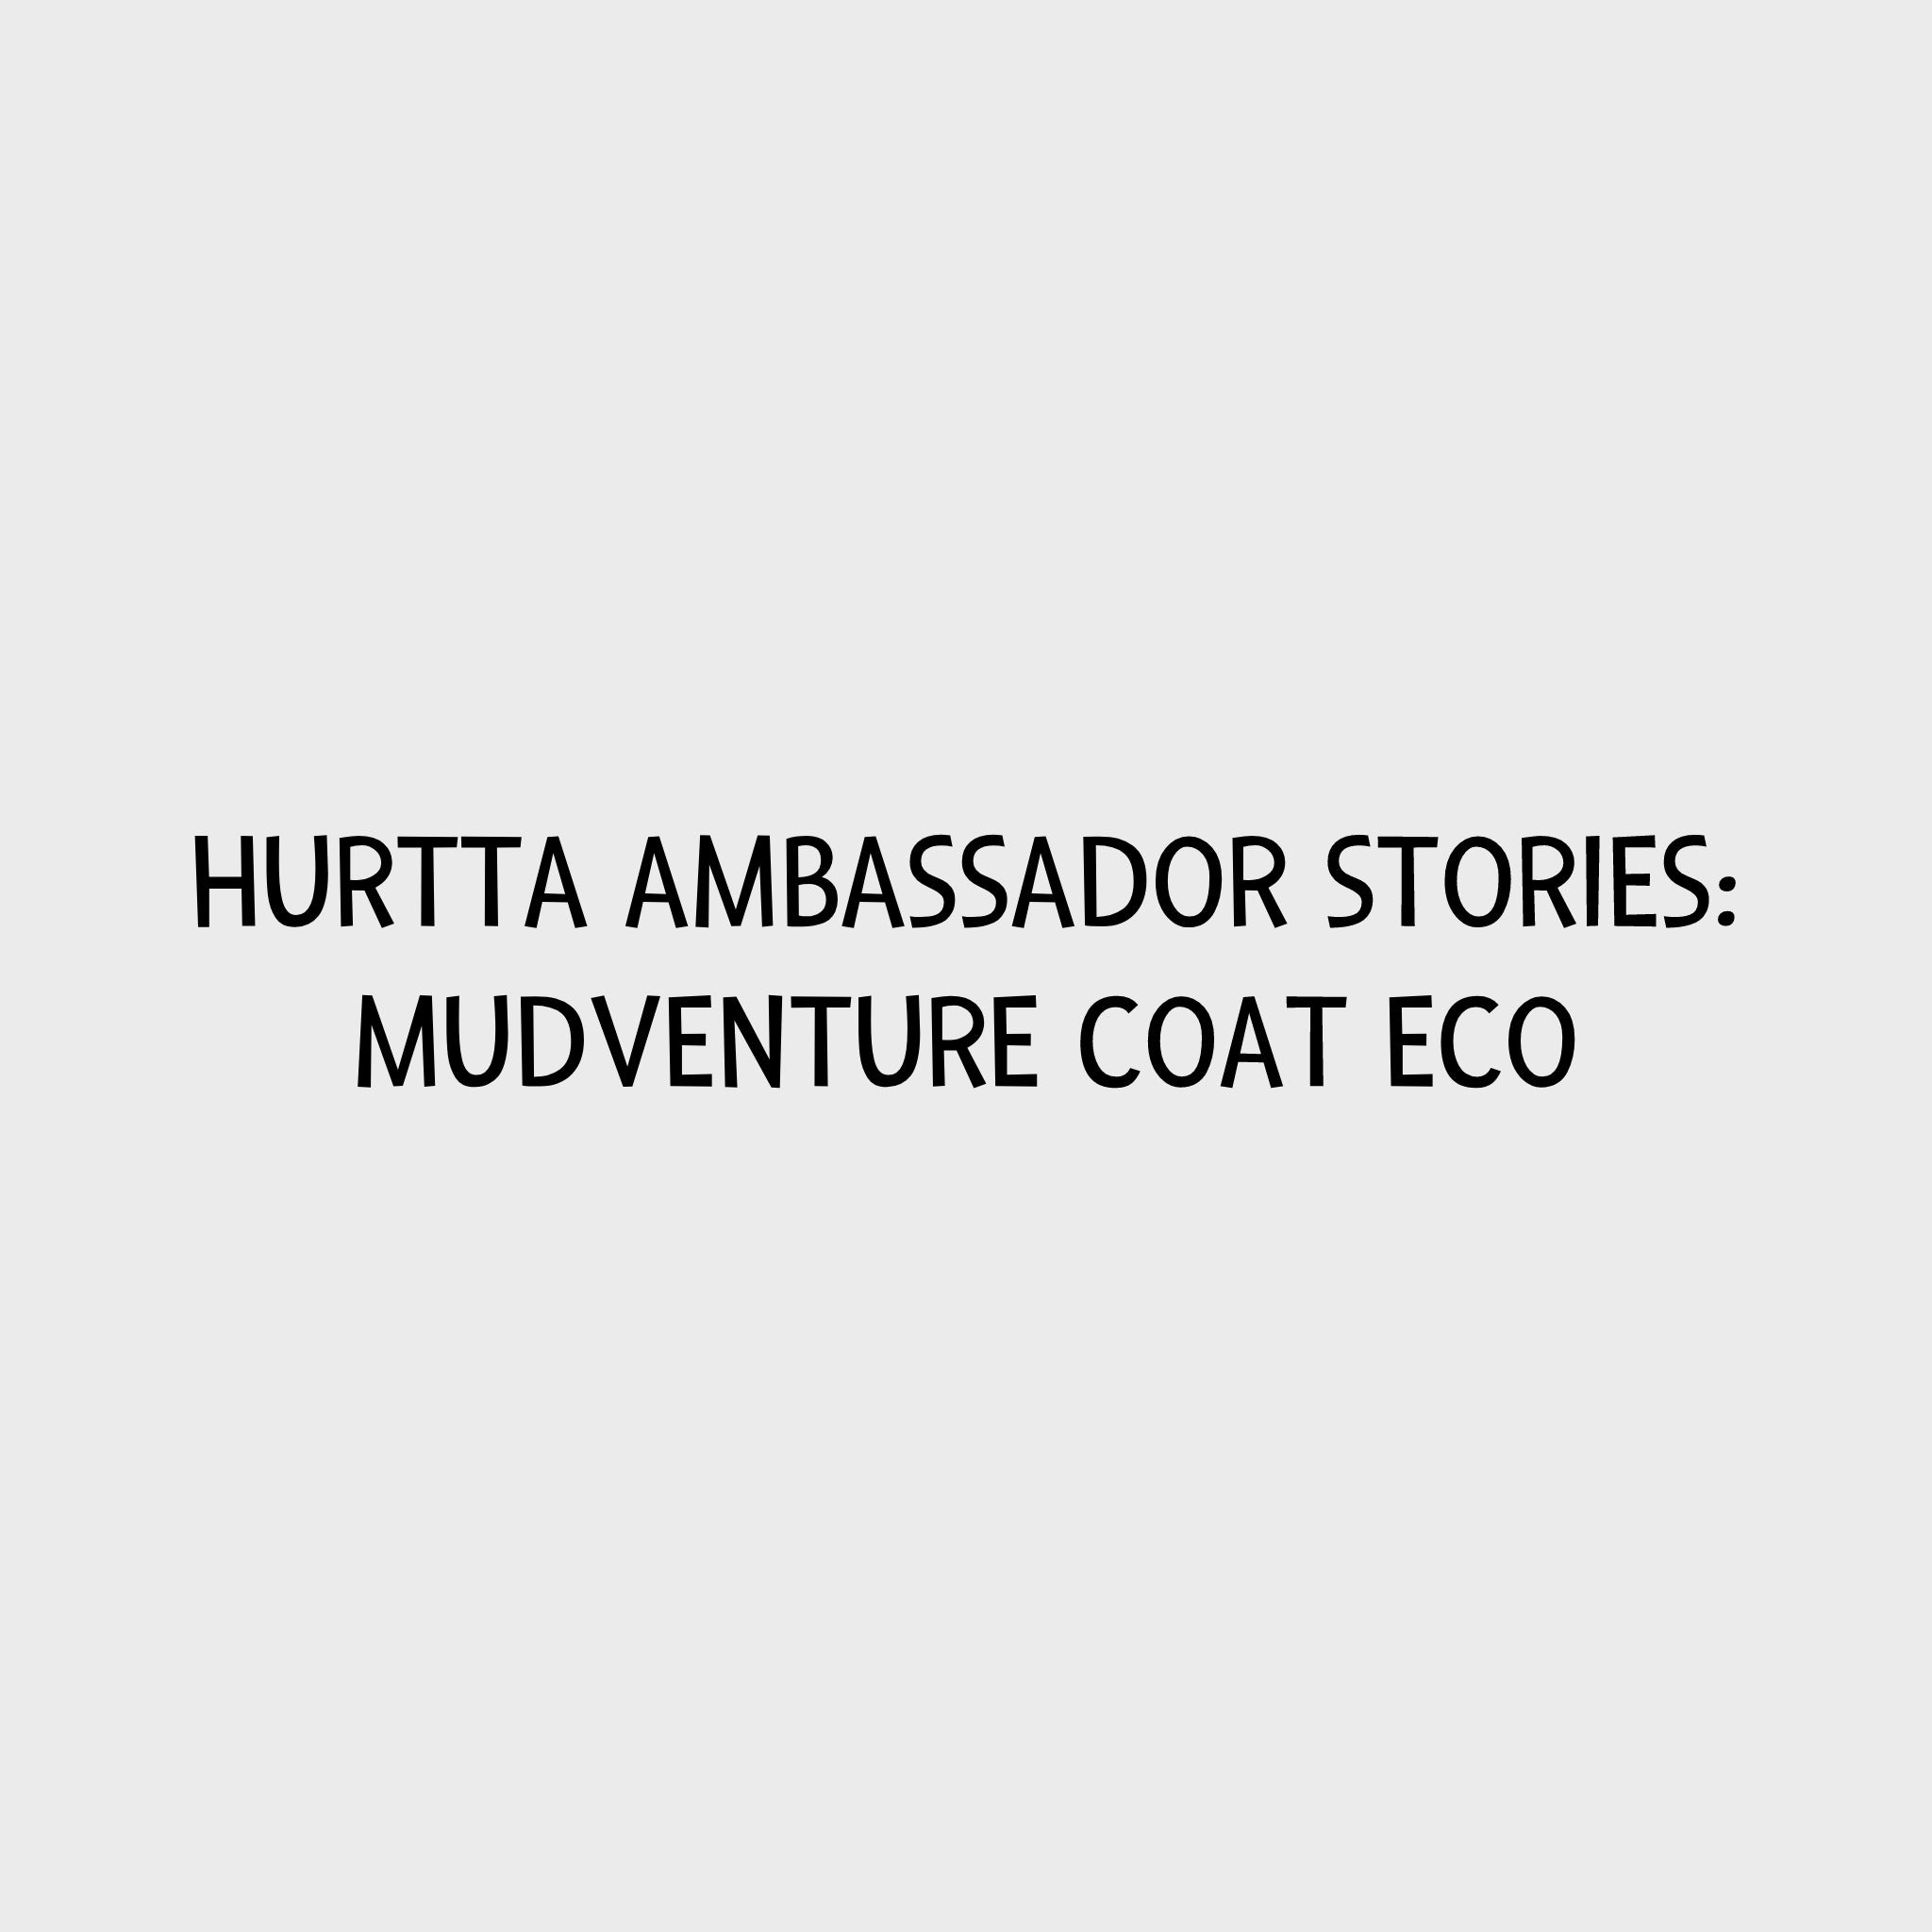 Video - Ambassador Stories: Hurtta Mudventure Coat ECO